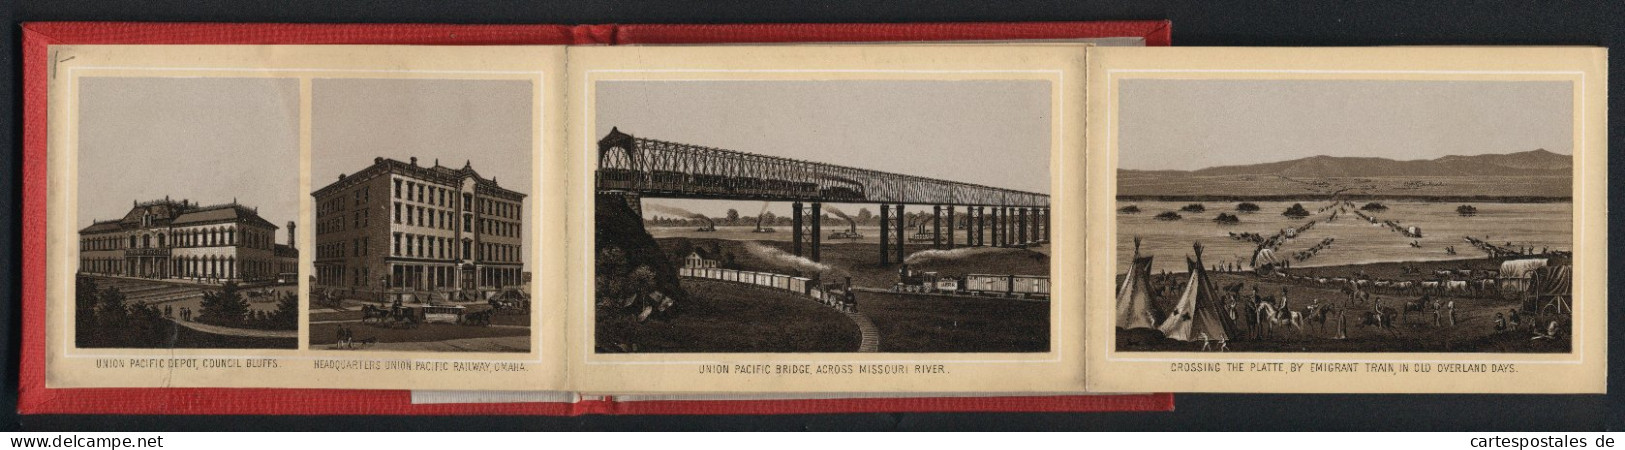 Leporello-Album Union Pacific Railwaymit 24 Lithographie-Ansichten, Headquarter Omaha, Weber Canon, Devils Gate, Ogden  - Litografia